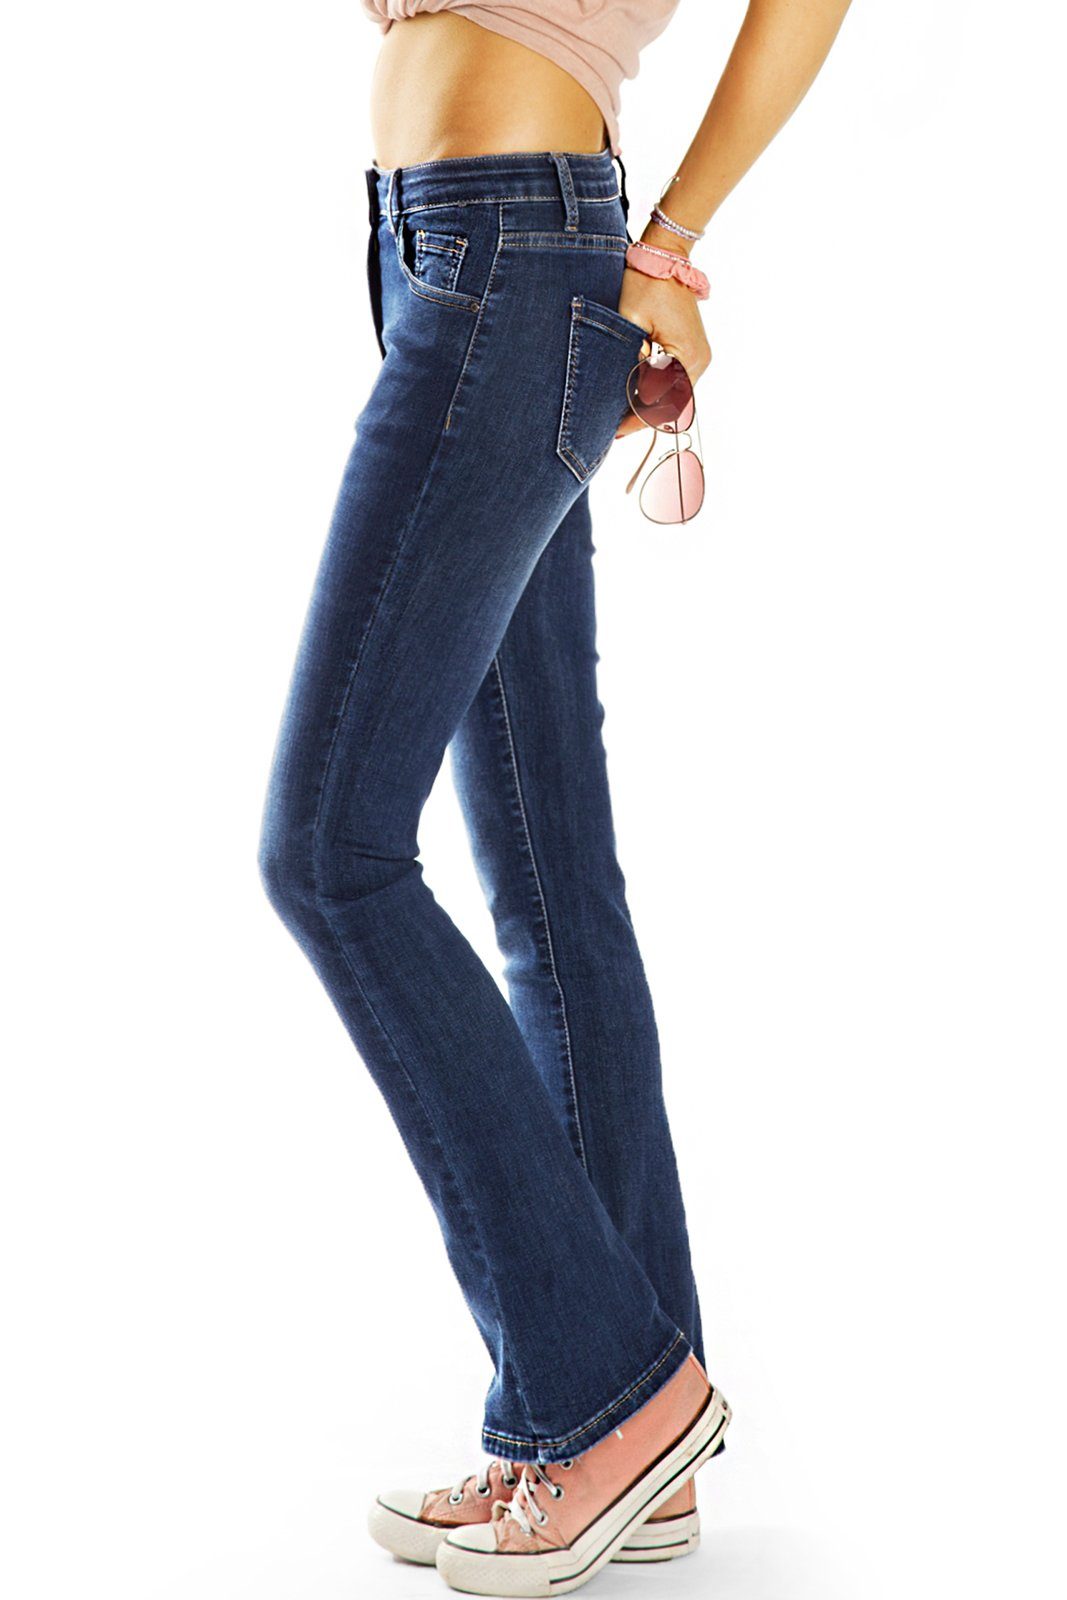 be styled Bootcut-Jeans Damen Bootcut Slim Stretch-Anteil, j8L mit Beinform ausgestellte - Leibhöhe Jeans Jeans Bootcut mit 5-Pocket-Style, normaler